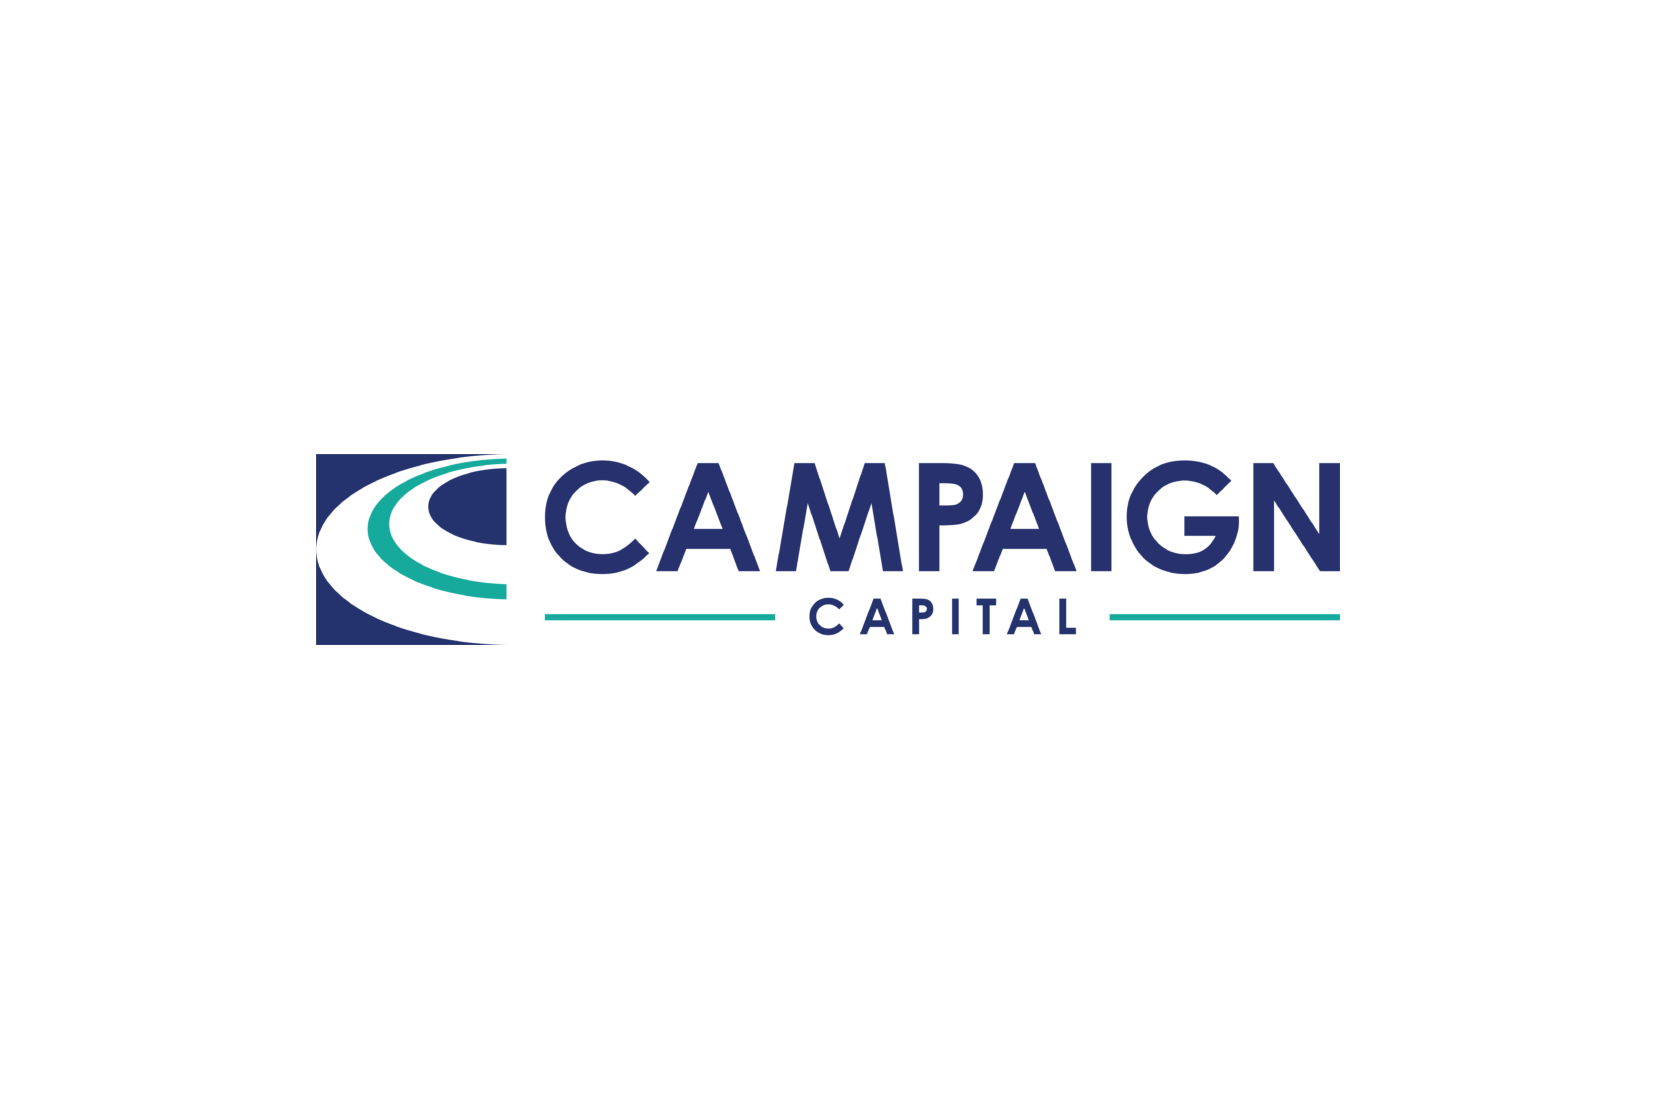 Campaign Capital